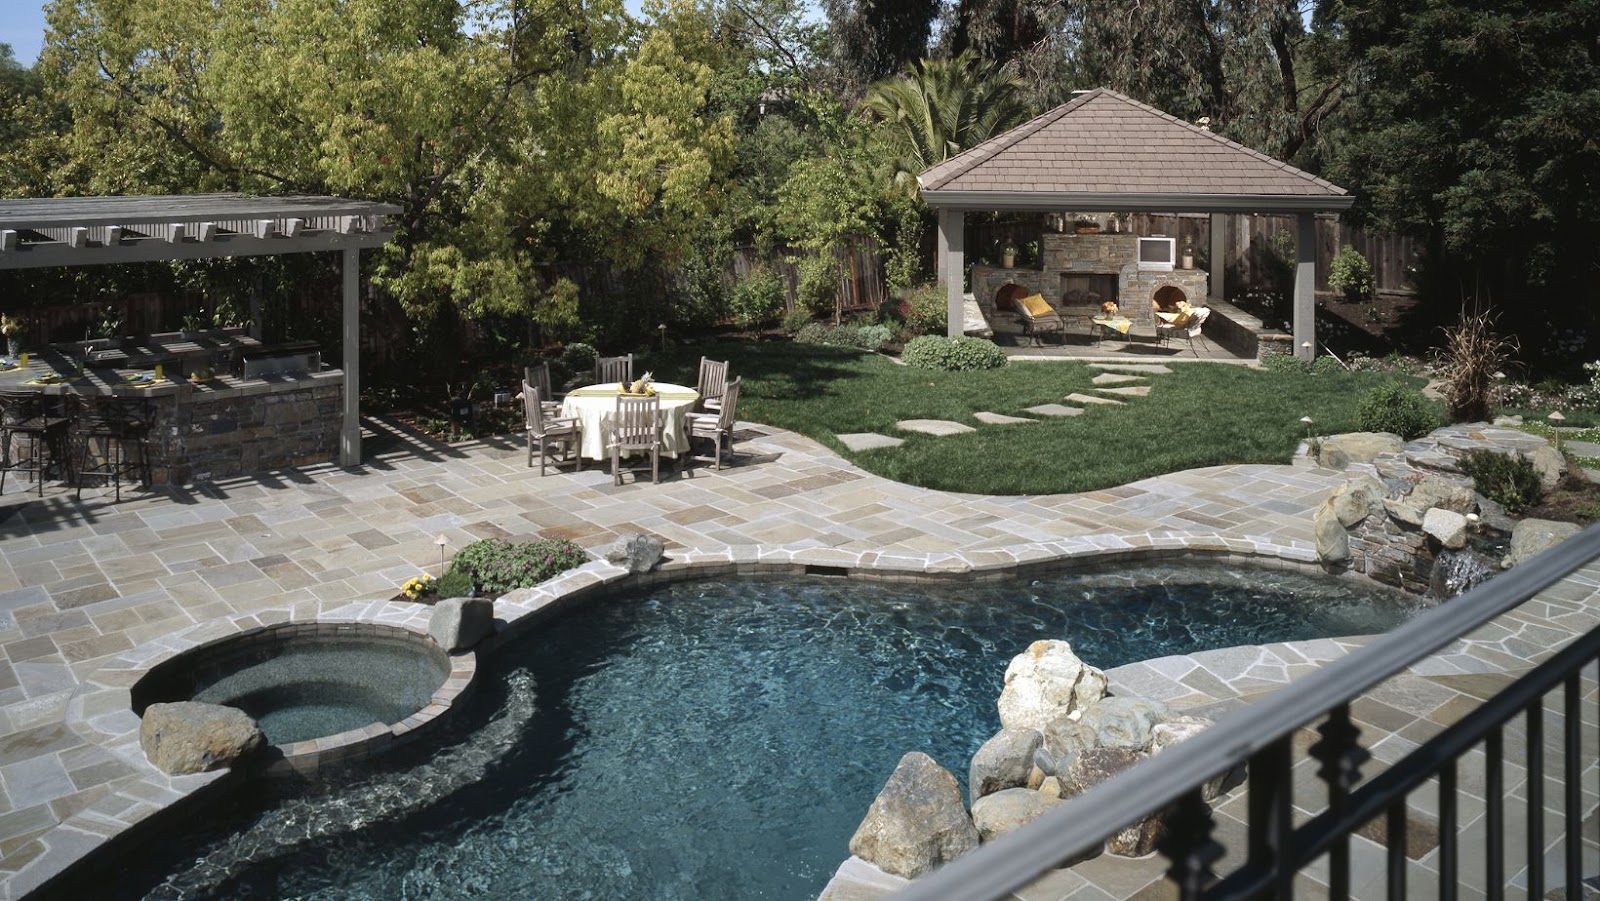 How deep can a backyard pool be